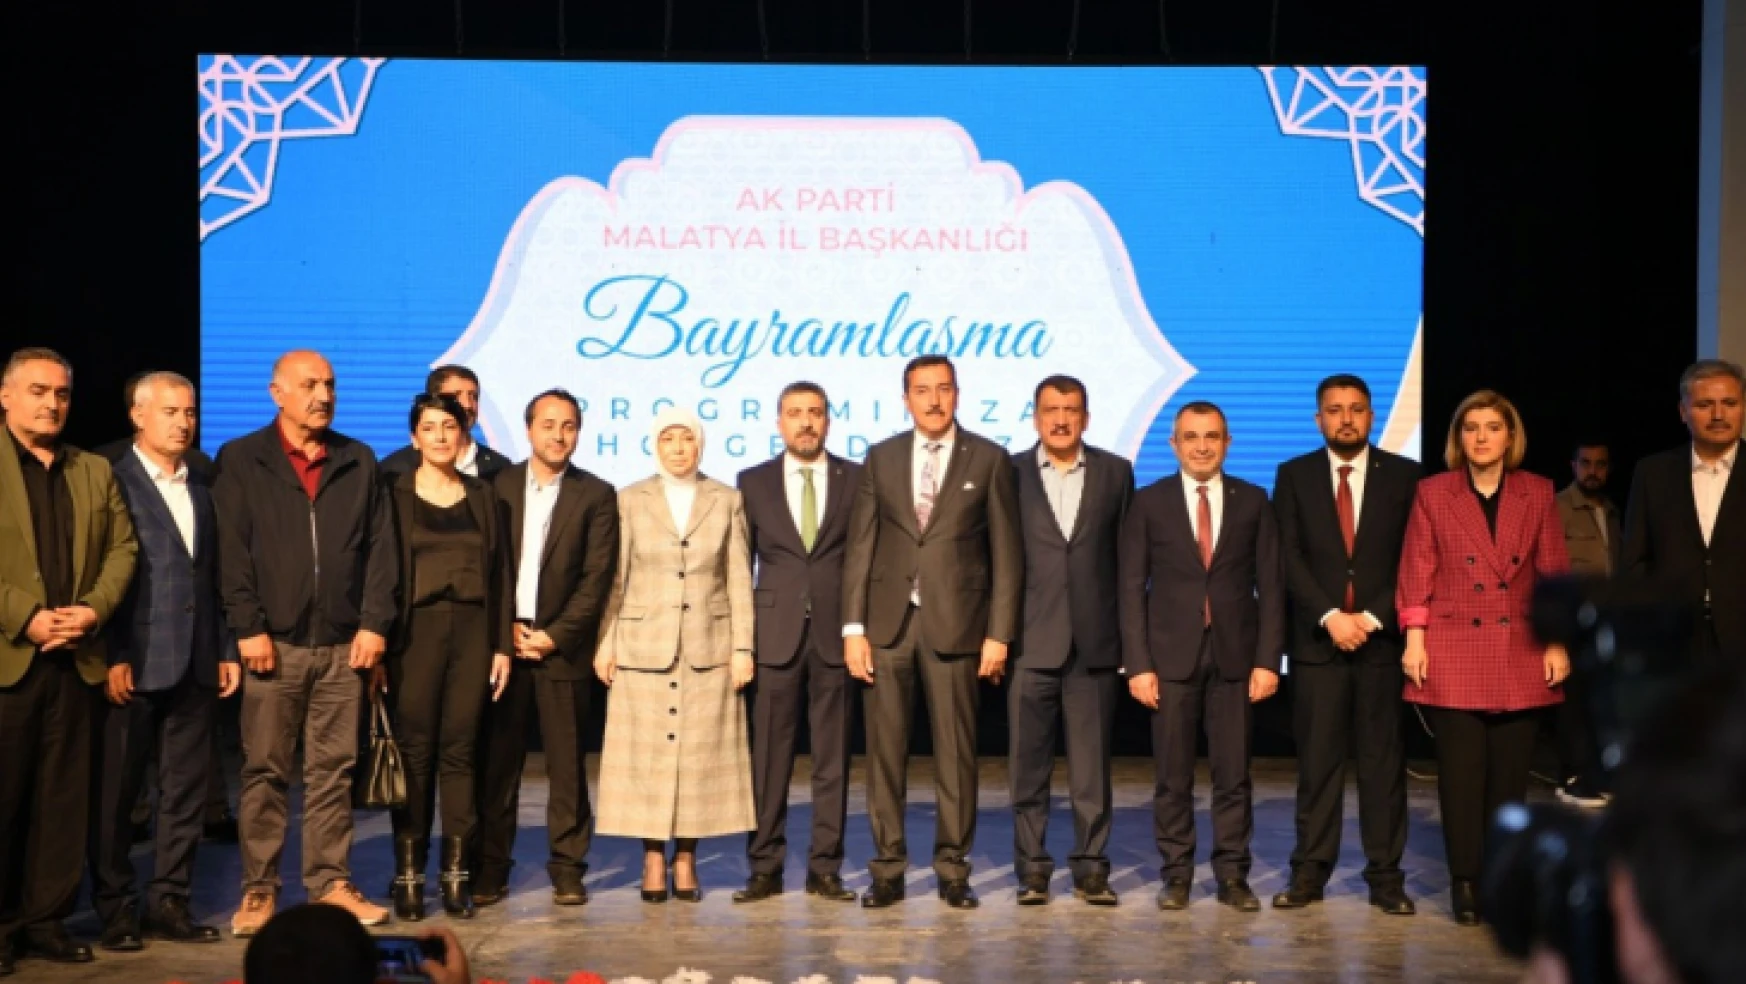 AK Parti Malatya'da Bayramlaşma Töreni Düzenlendi